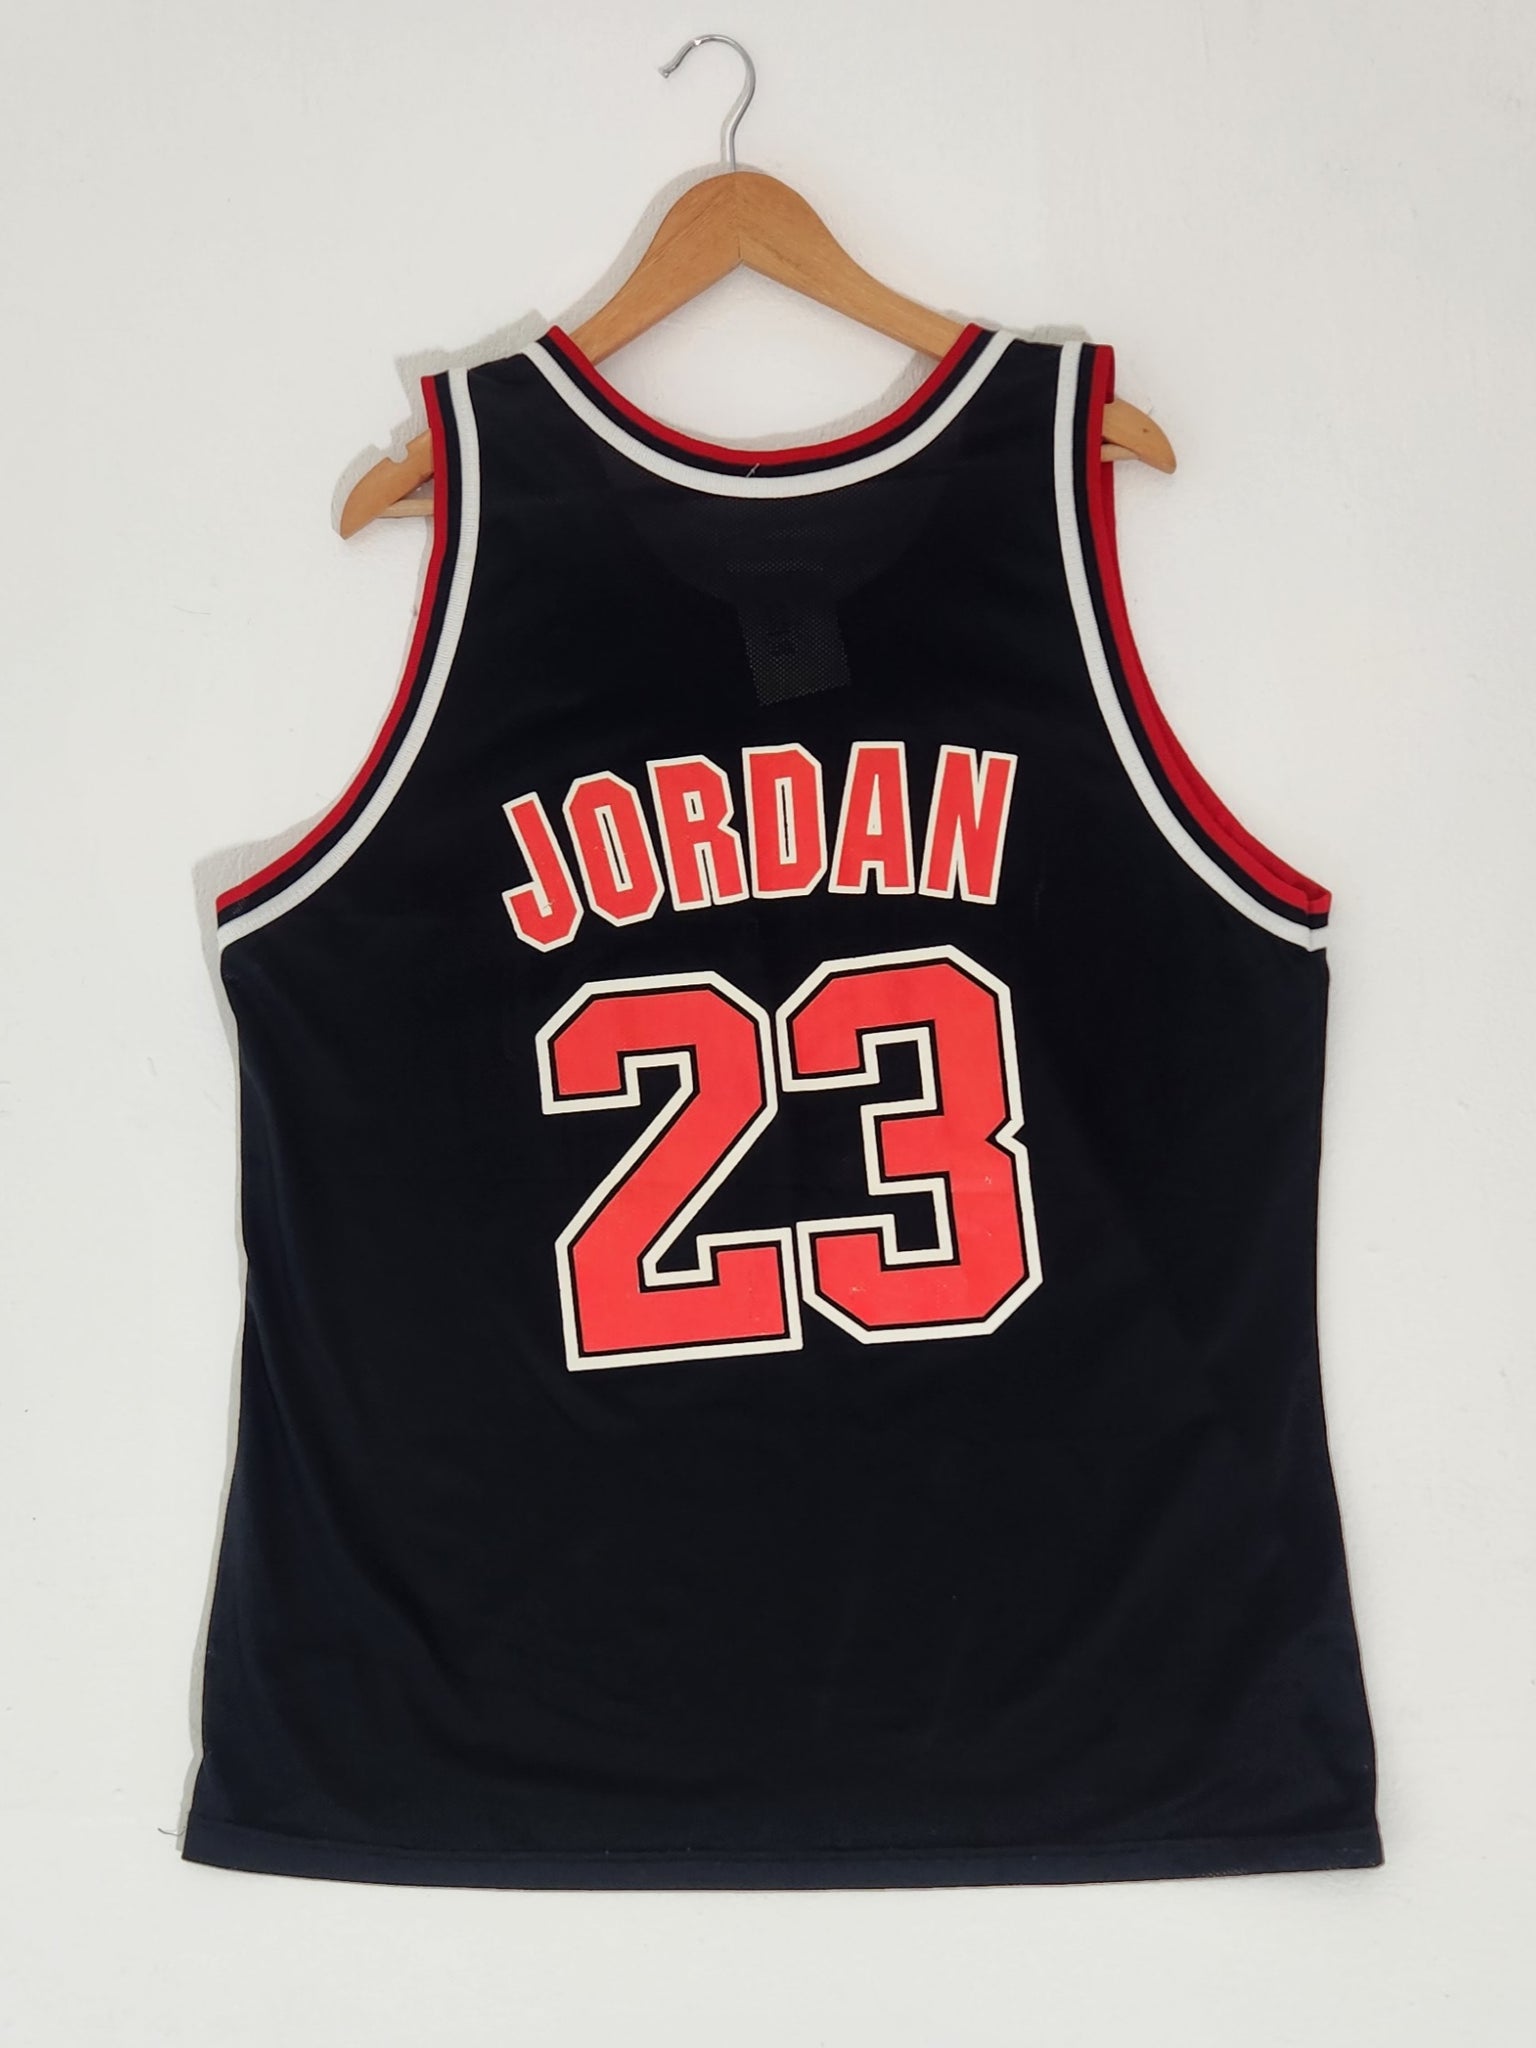 Size 48 VTG Champion Jordan Jersey Chicago Bulls 23 NBA 90s Made